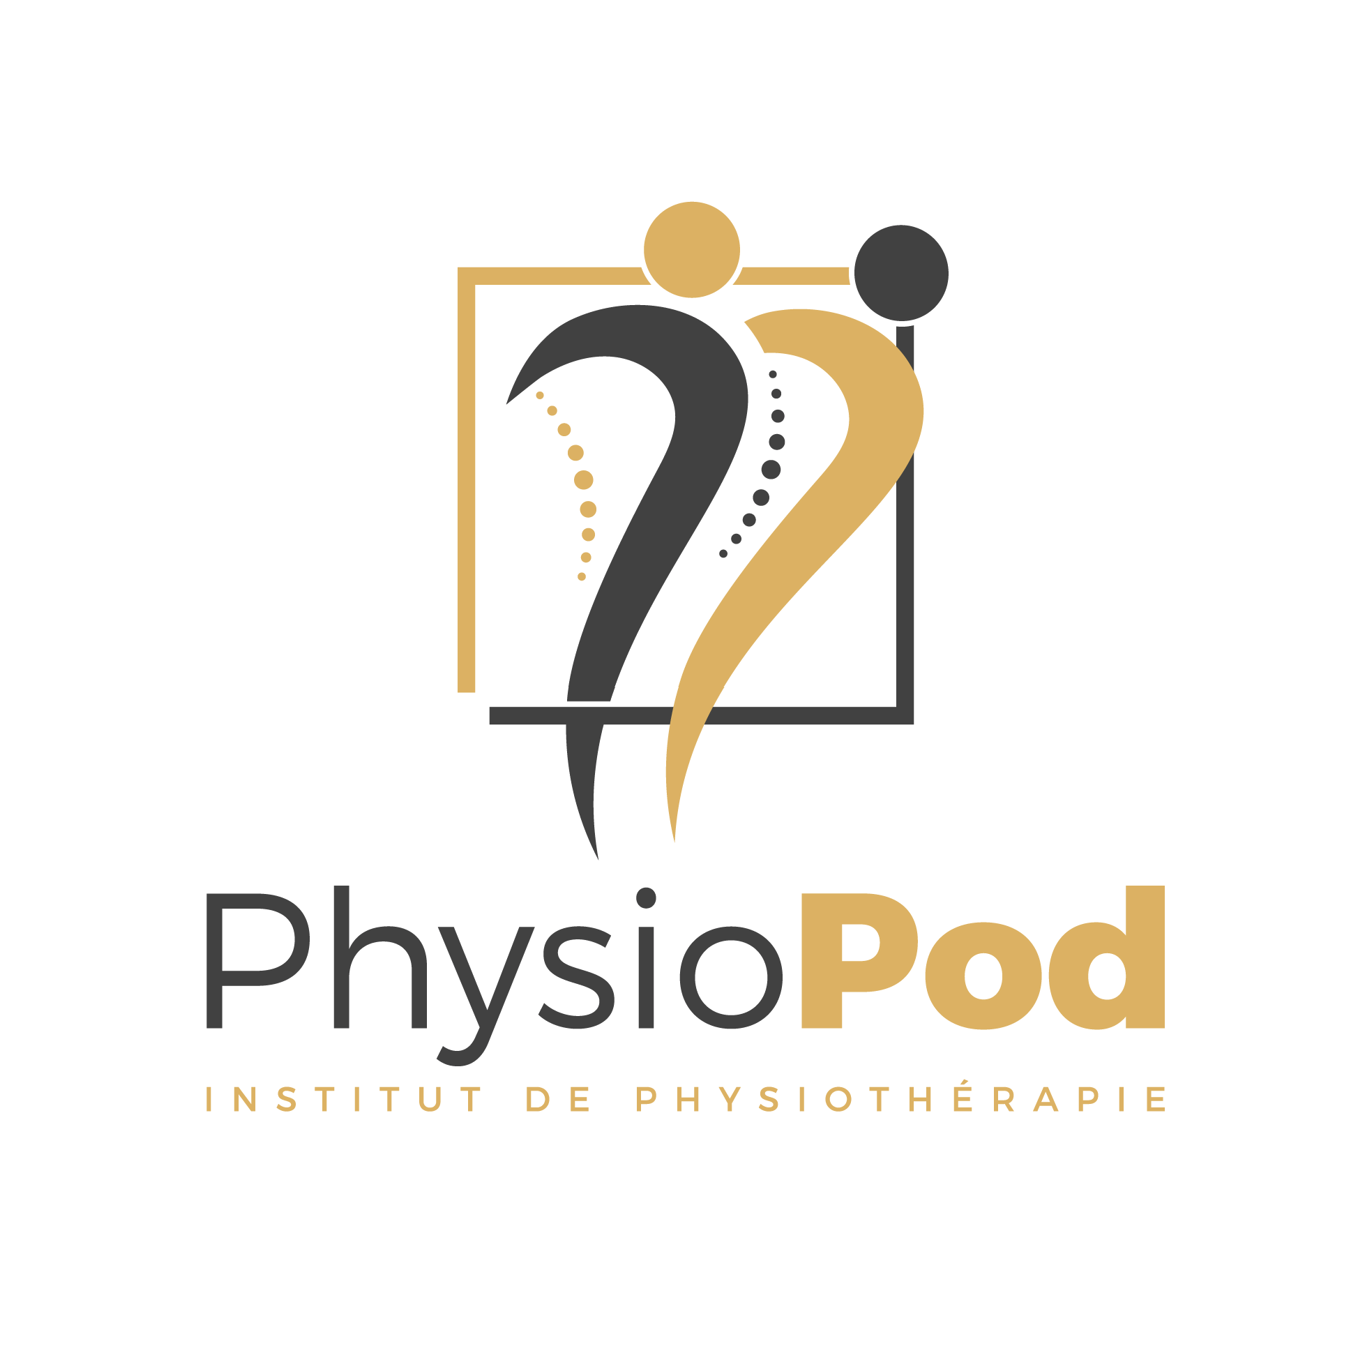 PhysioPod- Institut de physiothérapie Logo